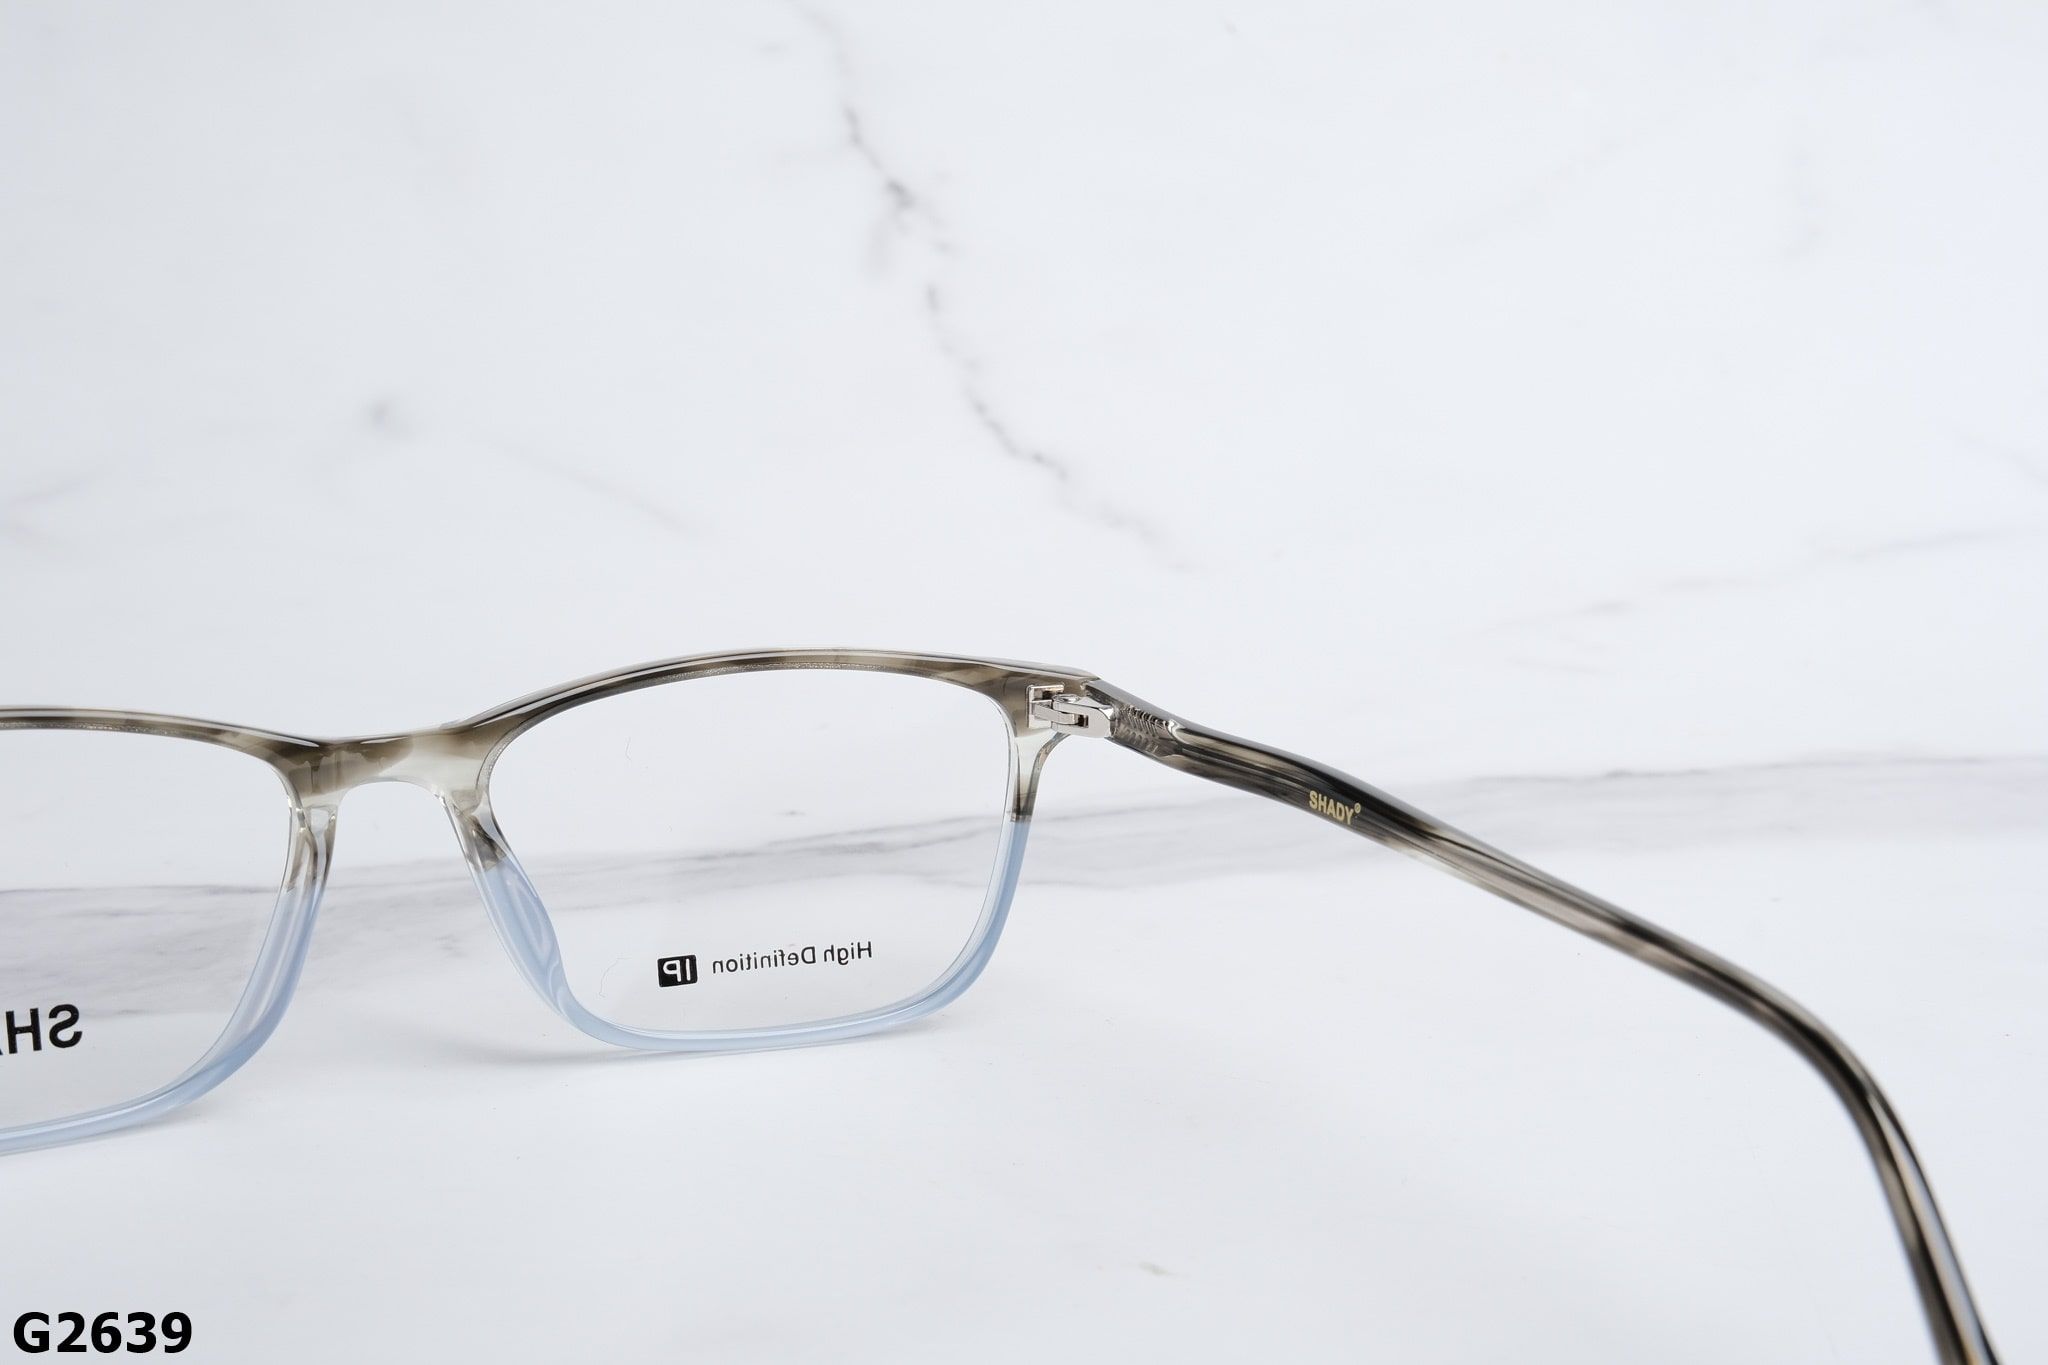  SHADY Eyewear - Glasses - G2639 